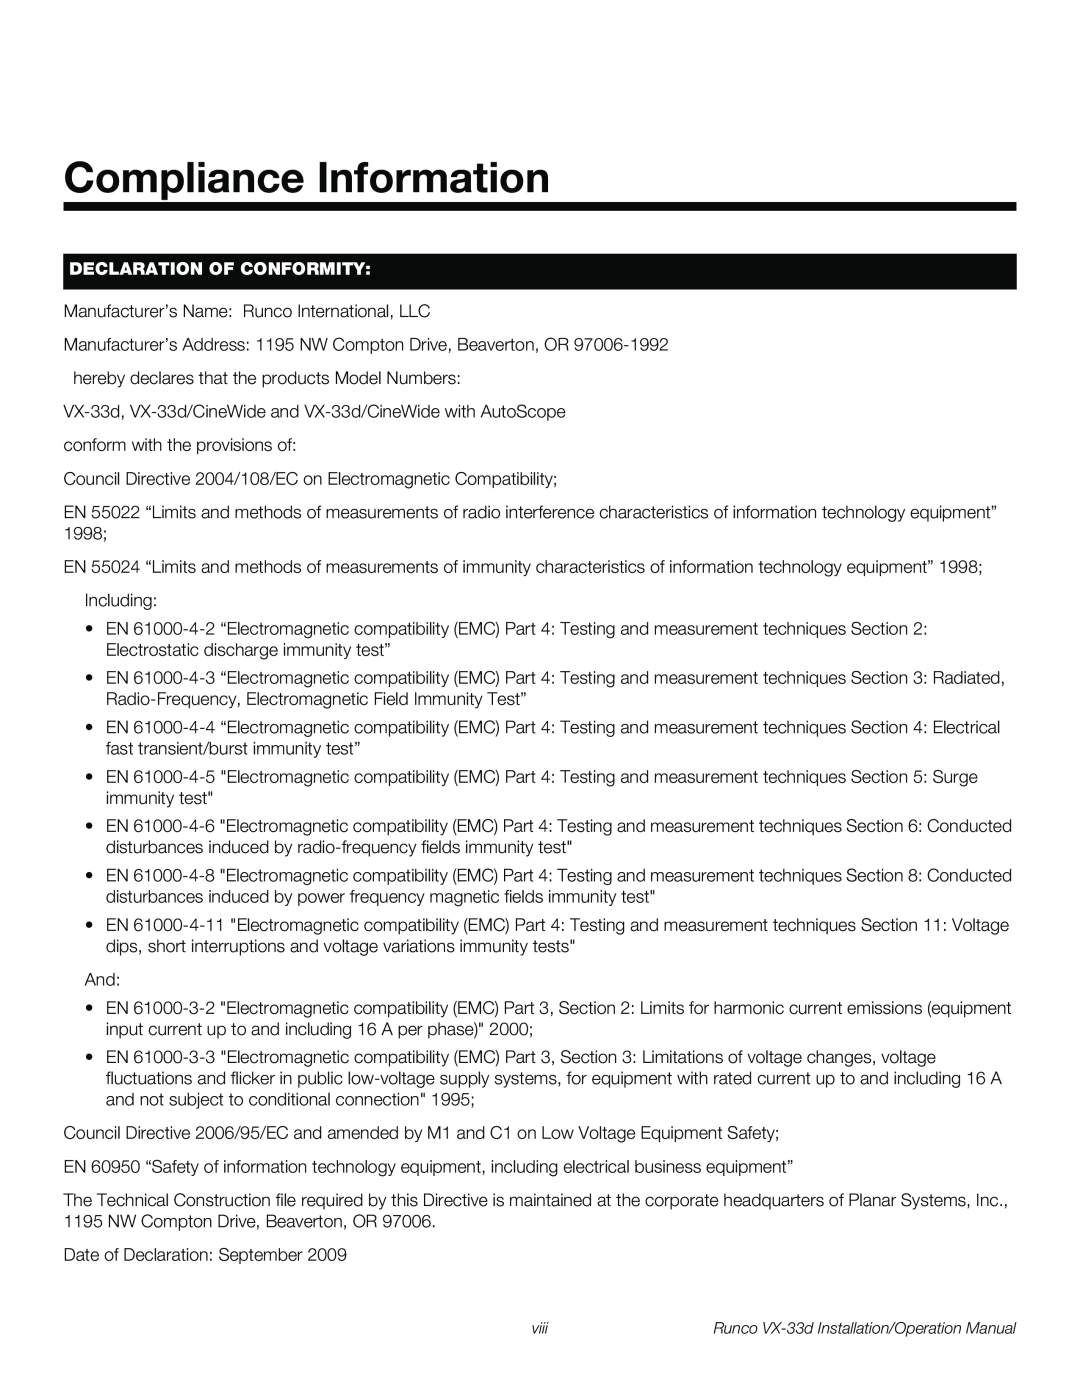 Runco VX-33D operation manual Compliance Information, Declaration Of Conformity 